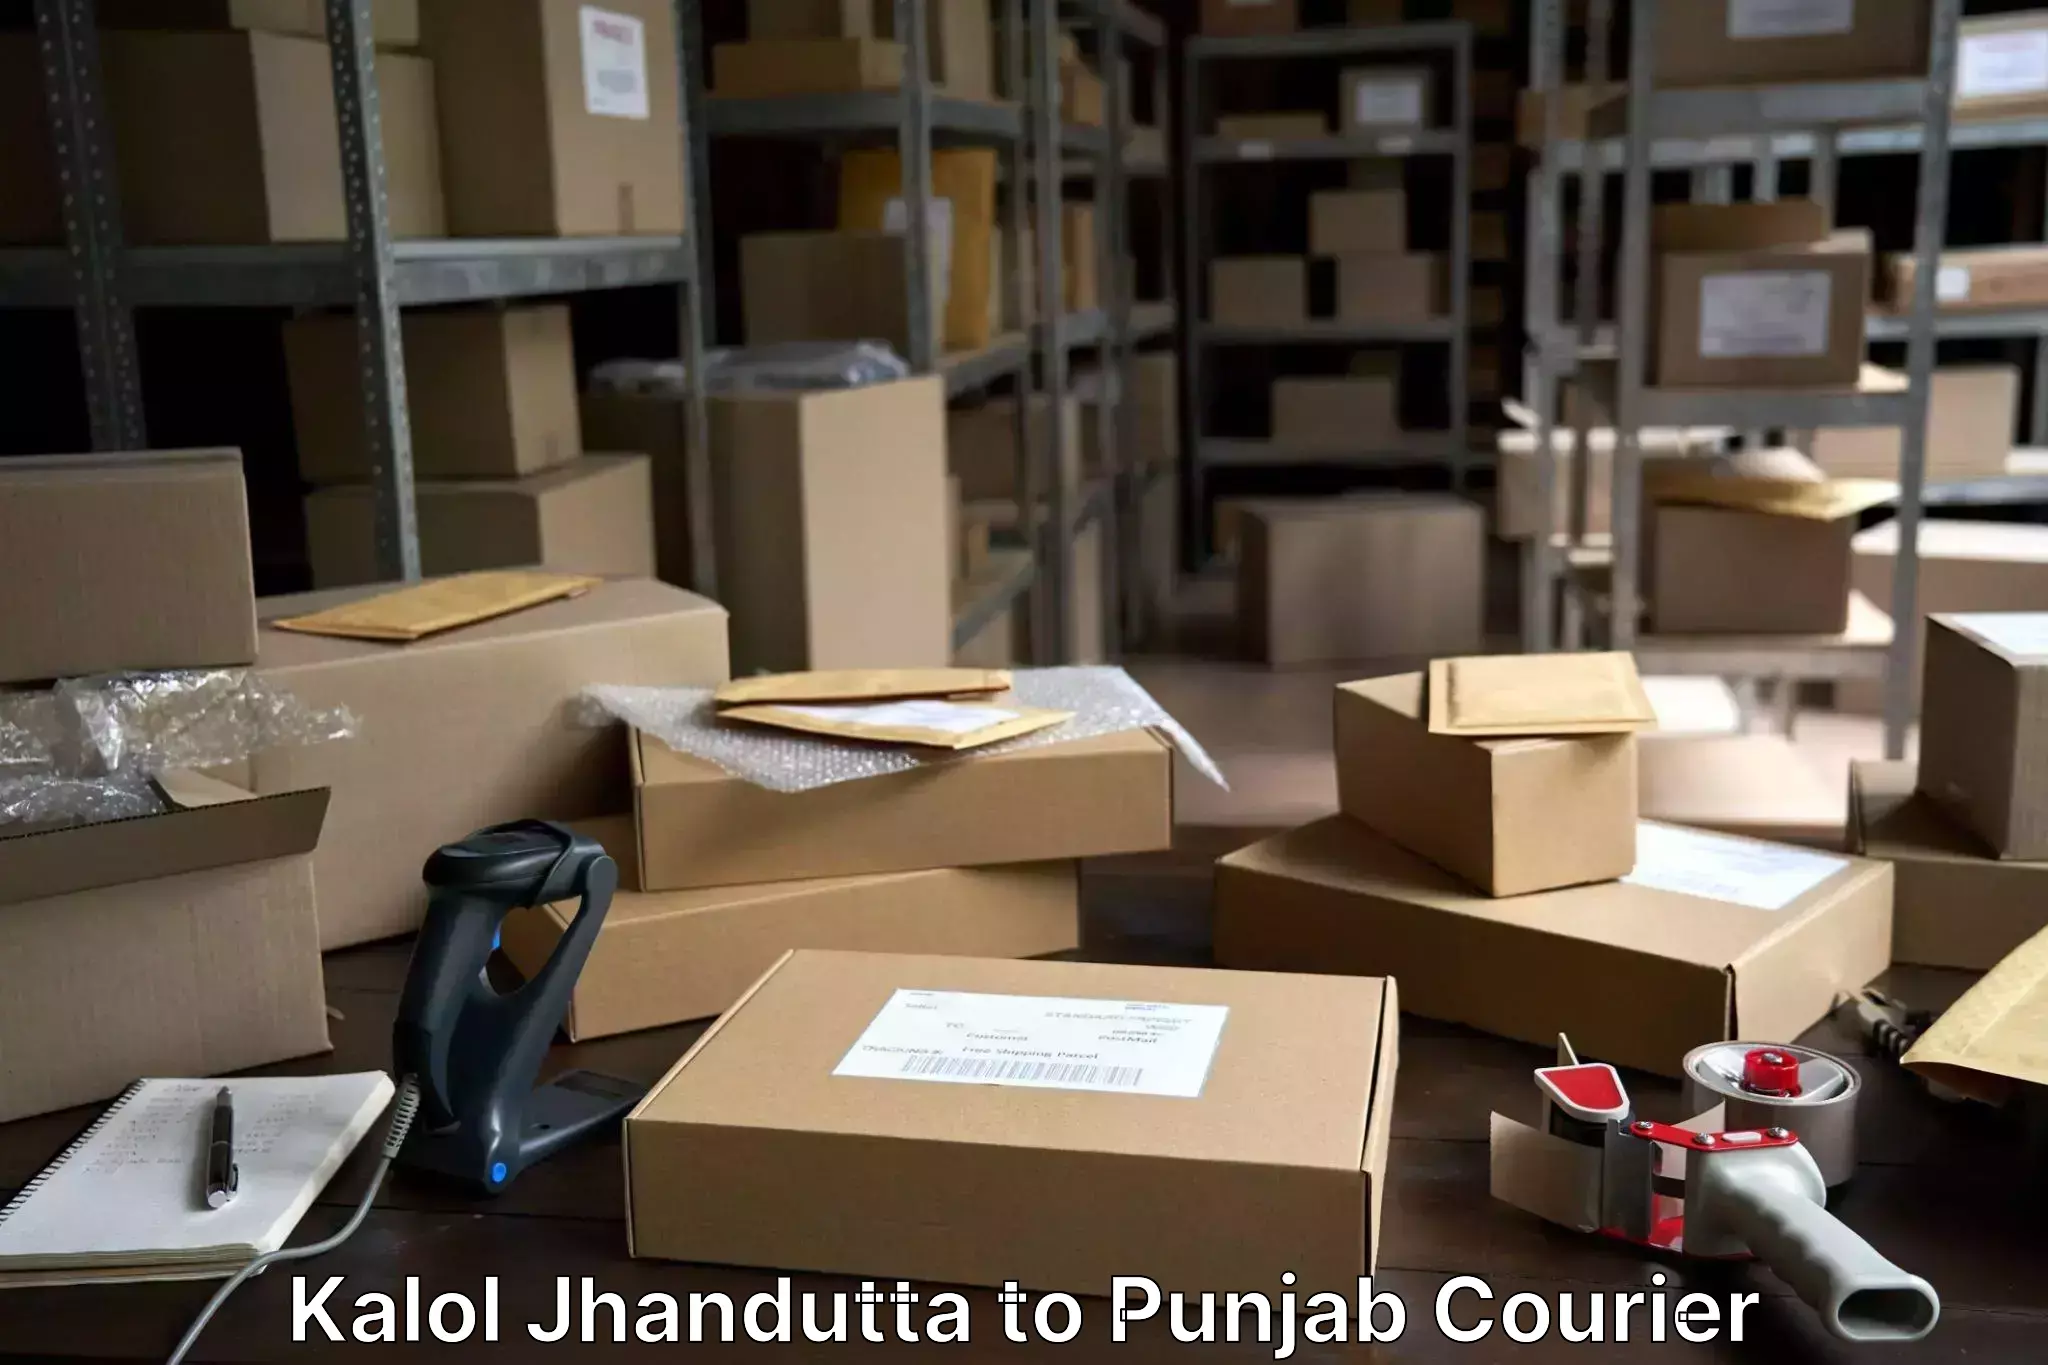 Urgent luggage shipment Kalol Jhandutta to Punjab